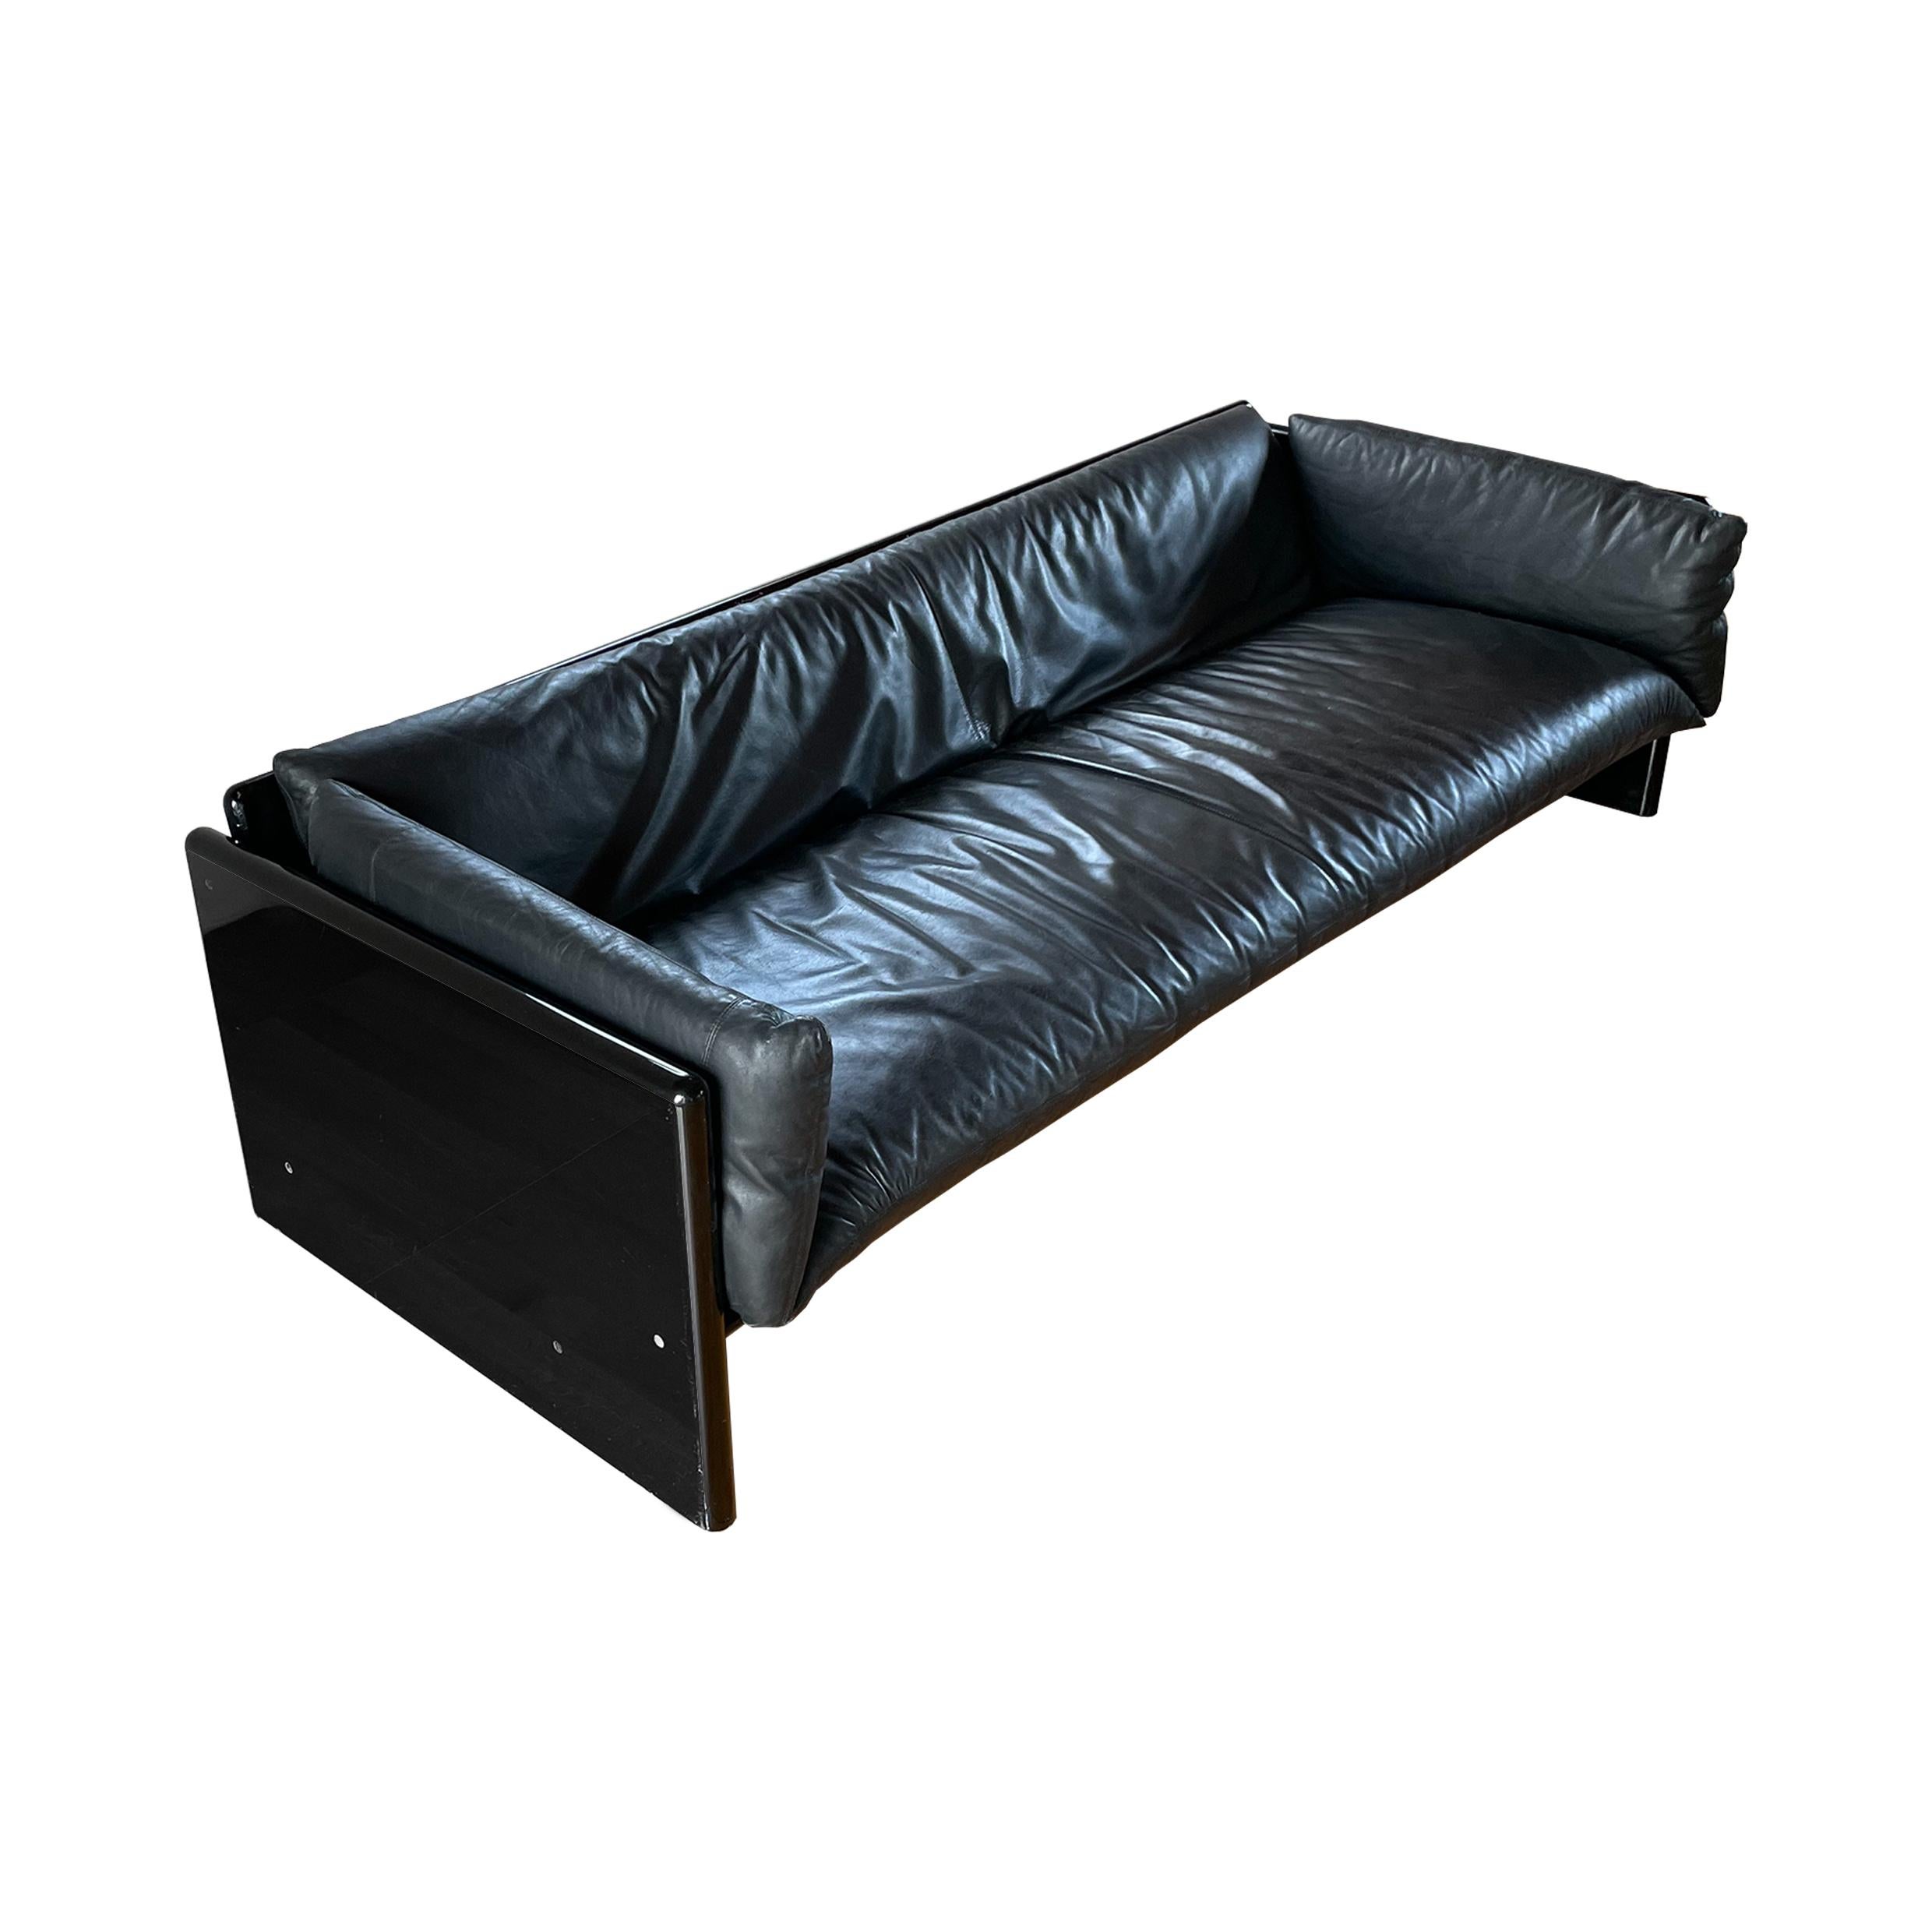 Dreisitziges Sofa 